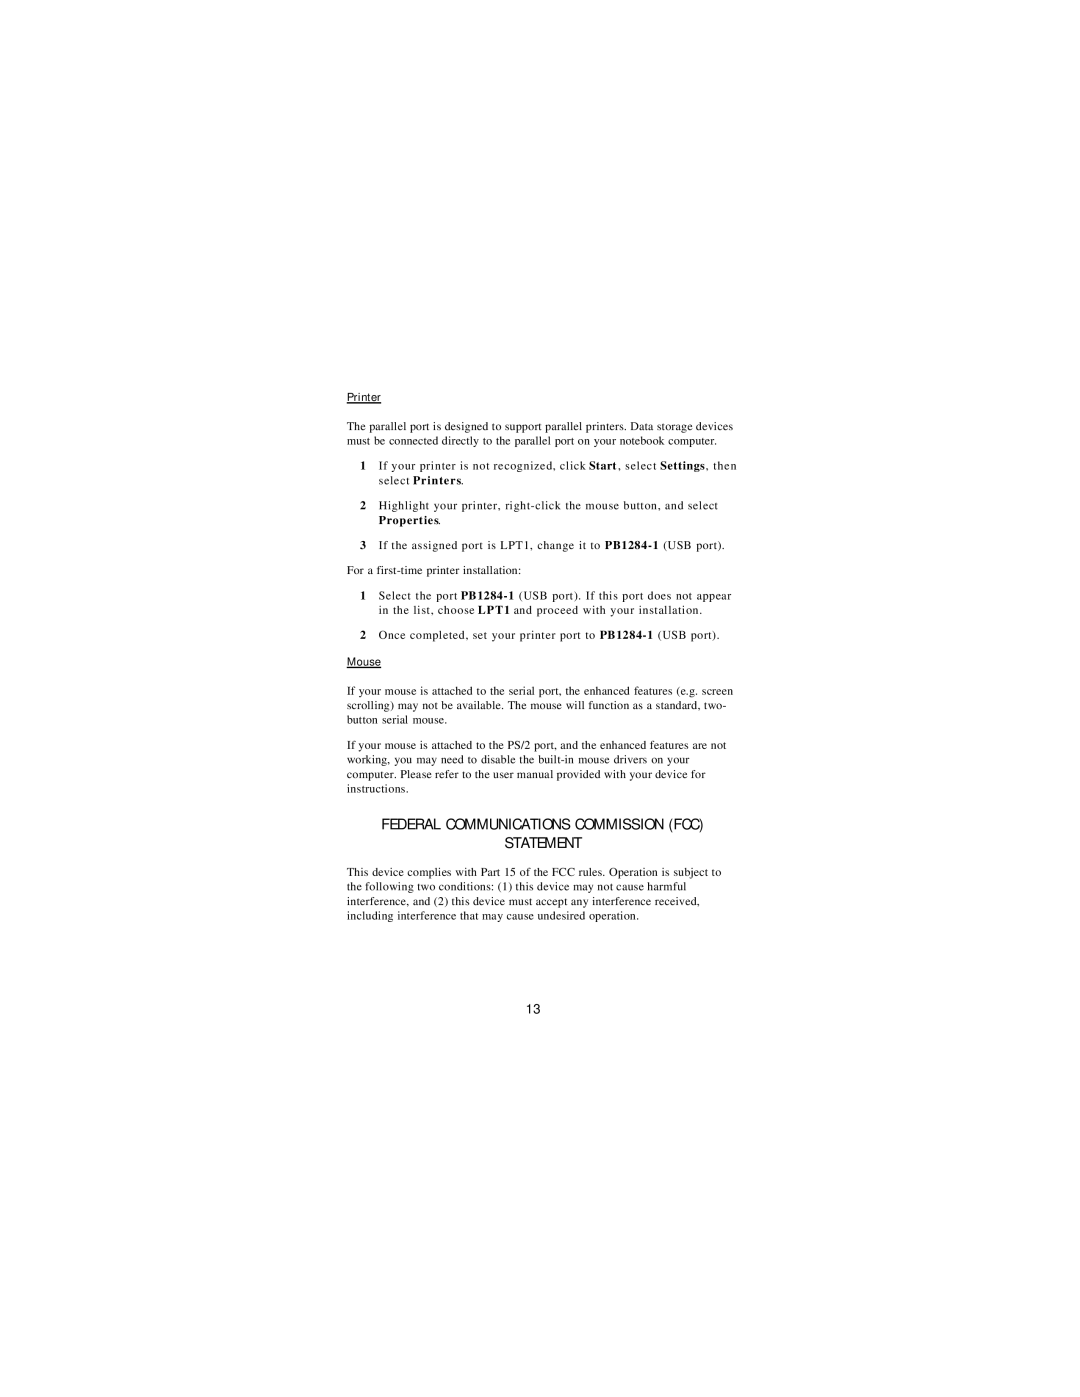 Targus USB Mobile Port Replicator manual Federal Communications Commission Fcc Statement, Printer, Mouse 